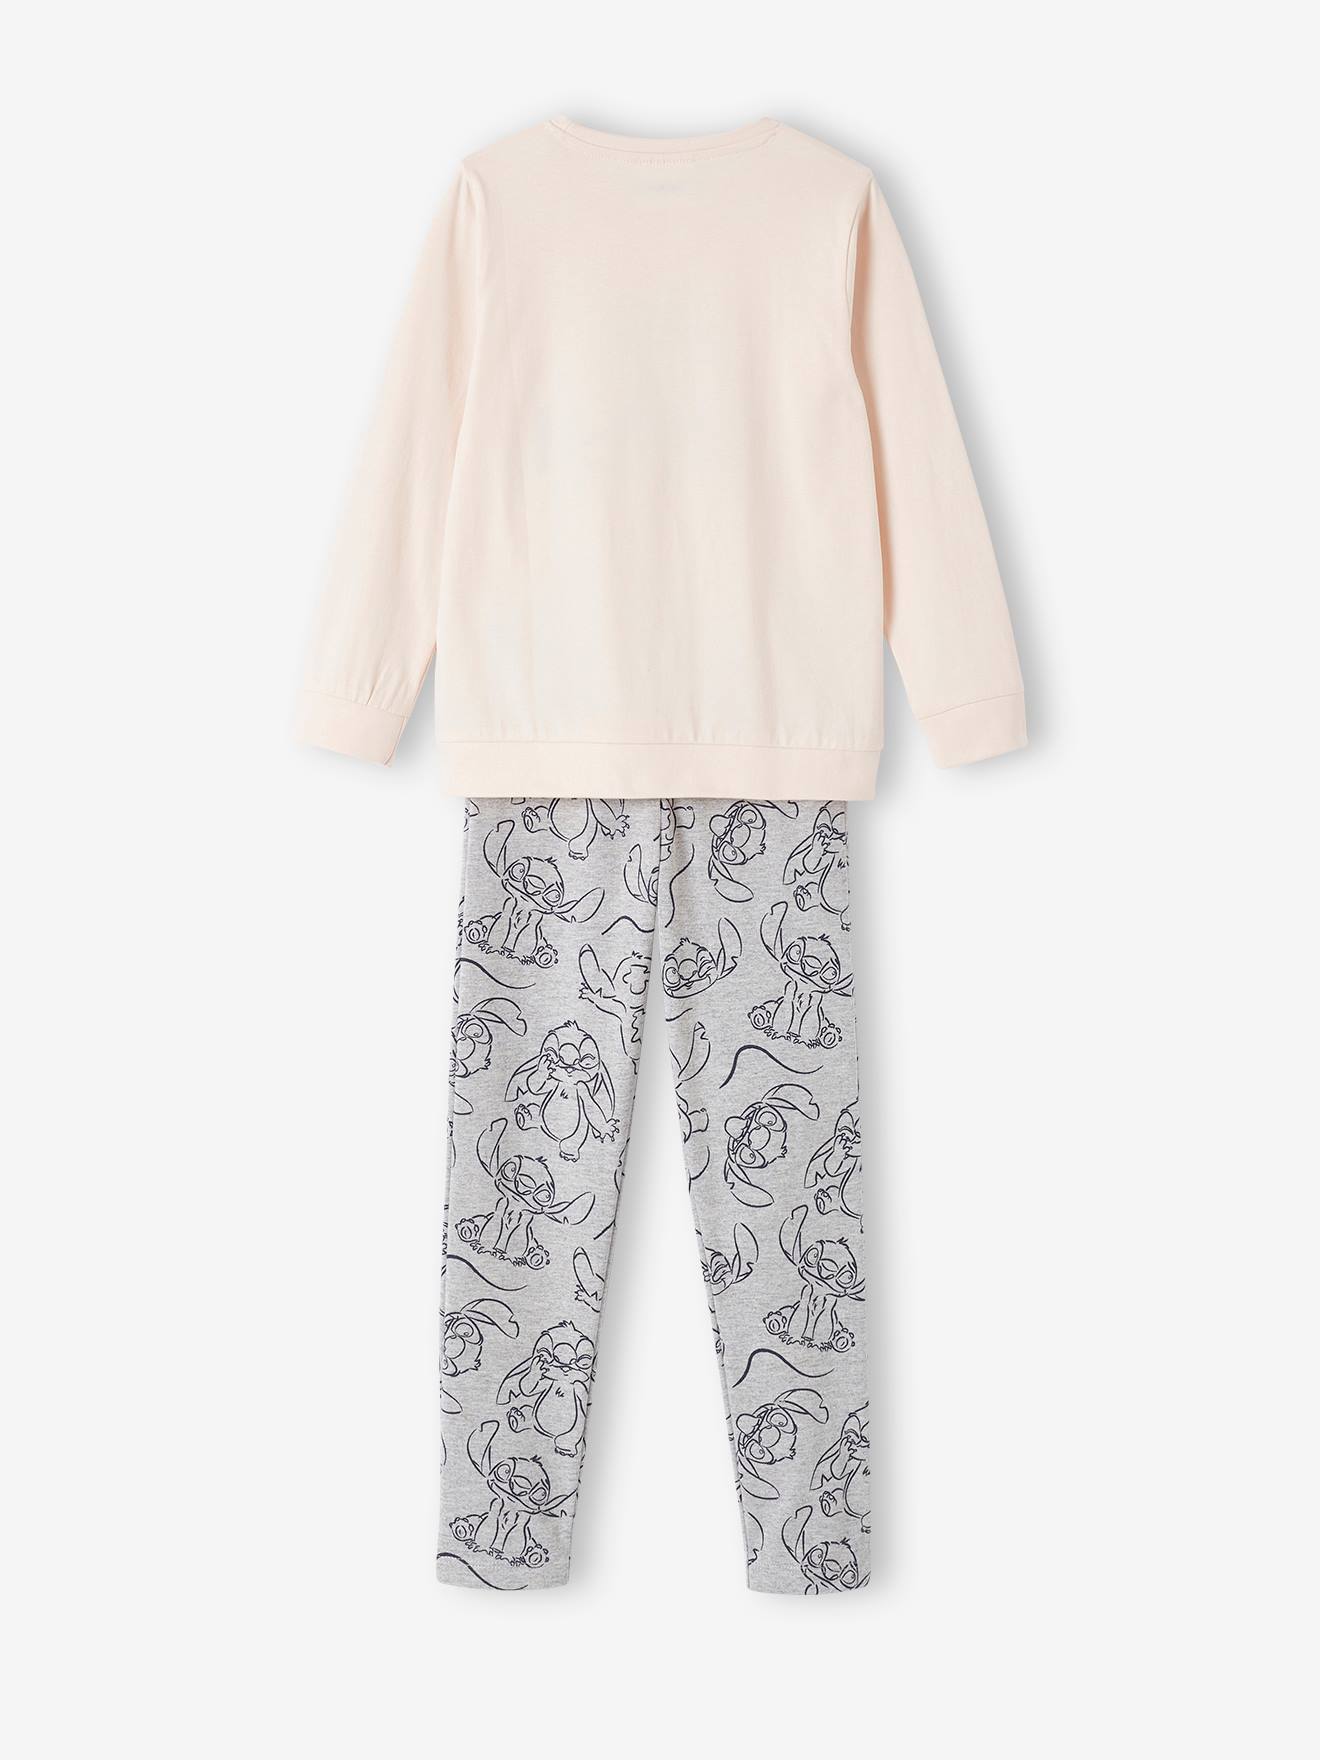 Pyjama long Stitch Fille Disney Lilo and Stitch